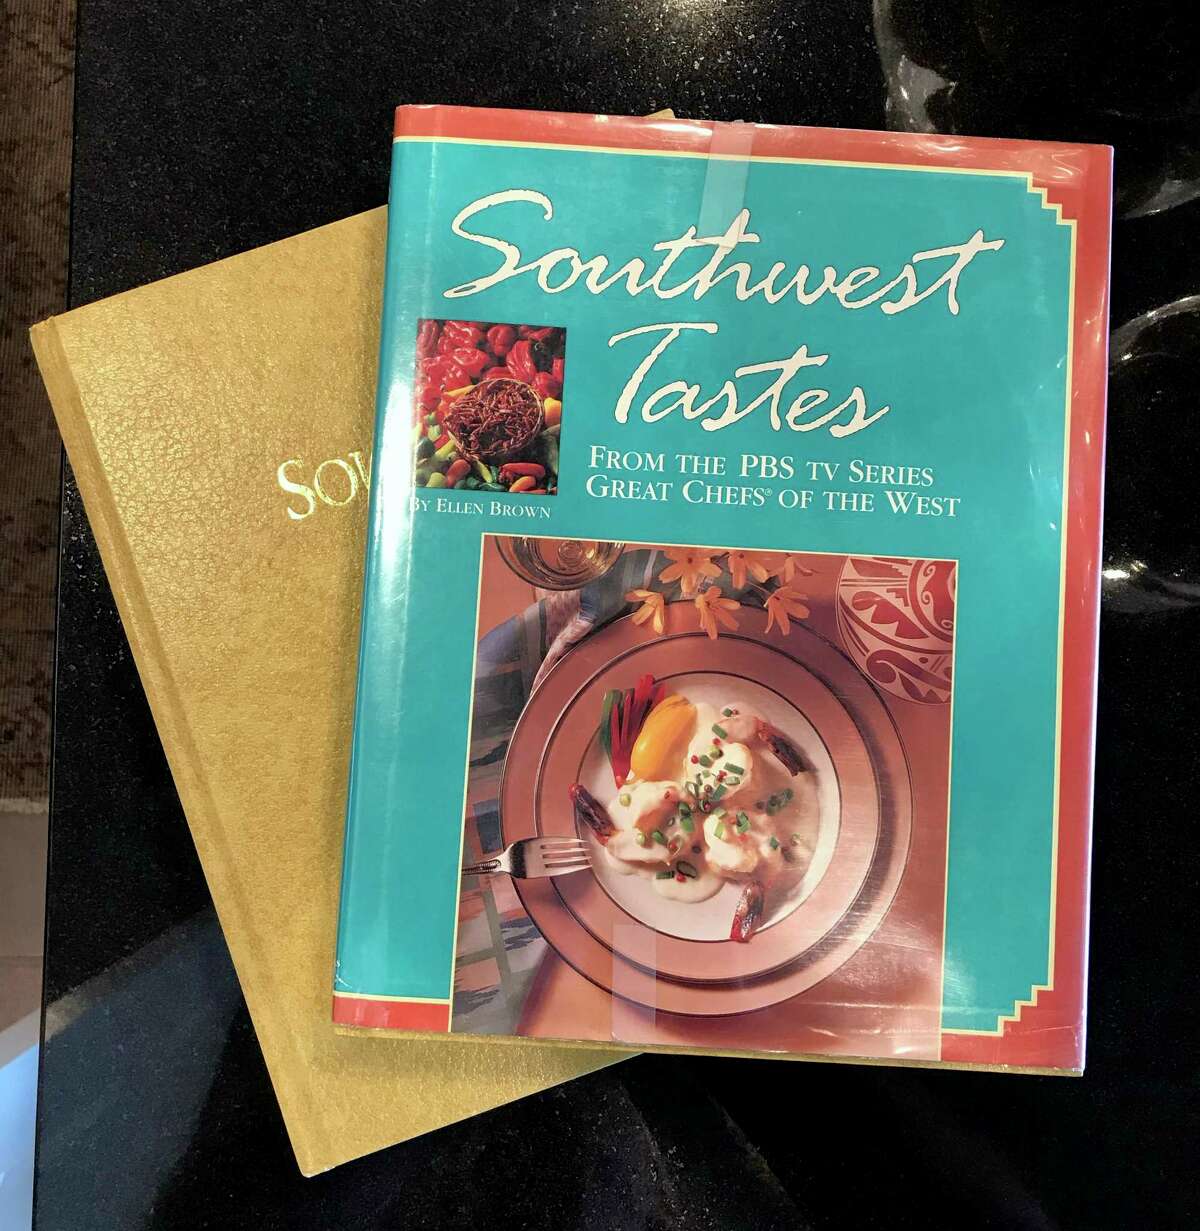 Michelle Barrera's desert island cookbook is 